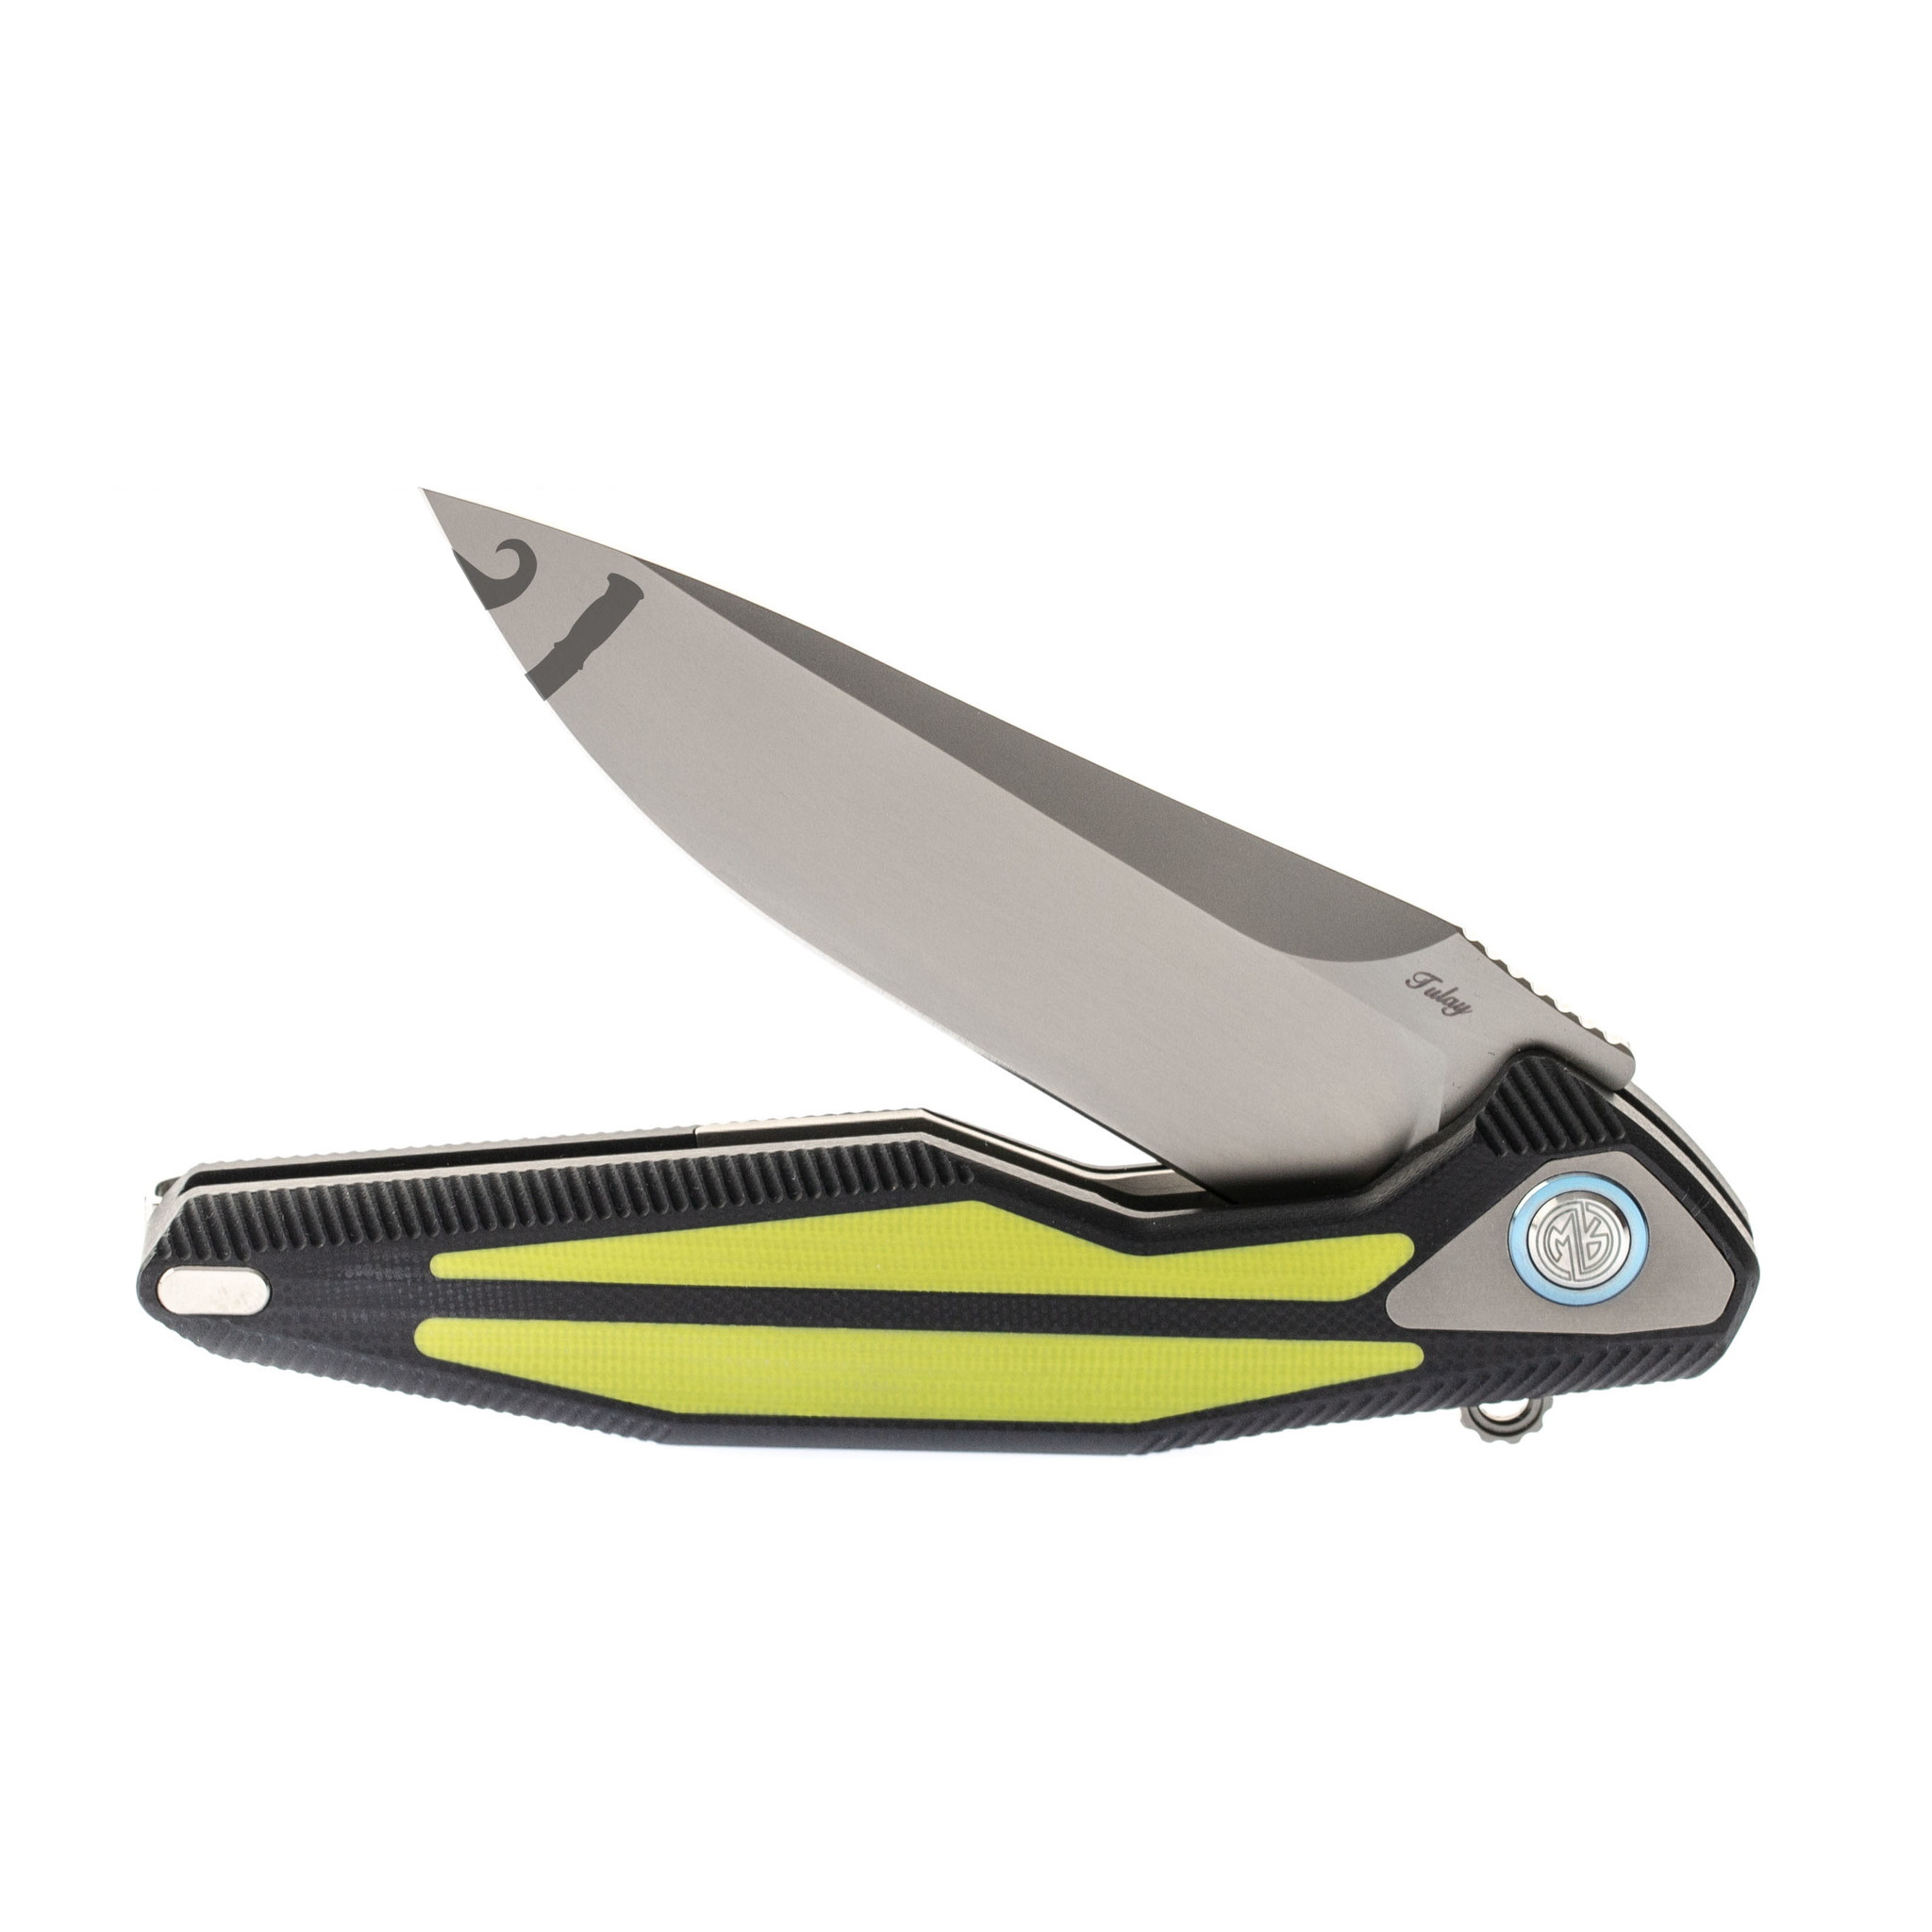 Нож складной Tulay Rikeknife, сталь 154CM, Yellow G10 - фото 5